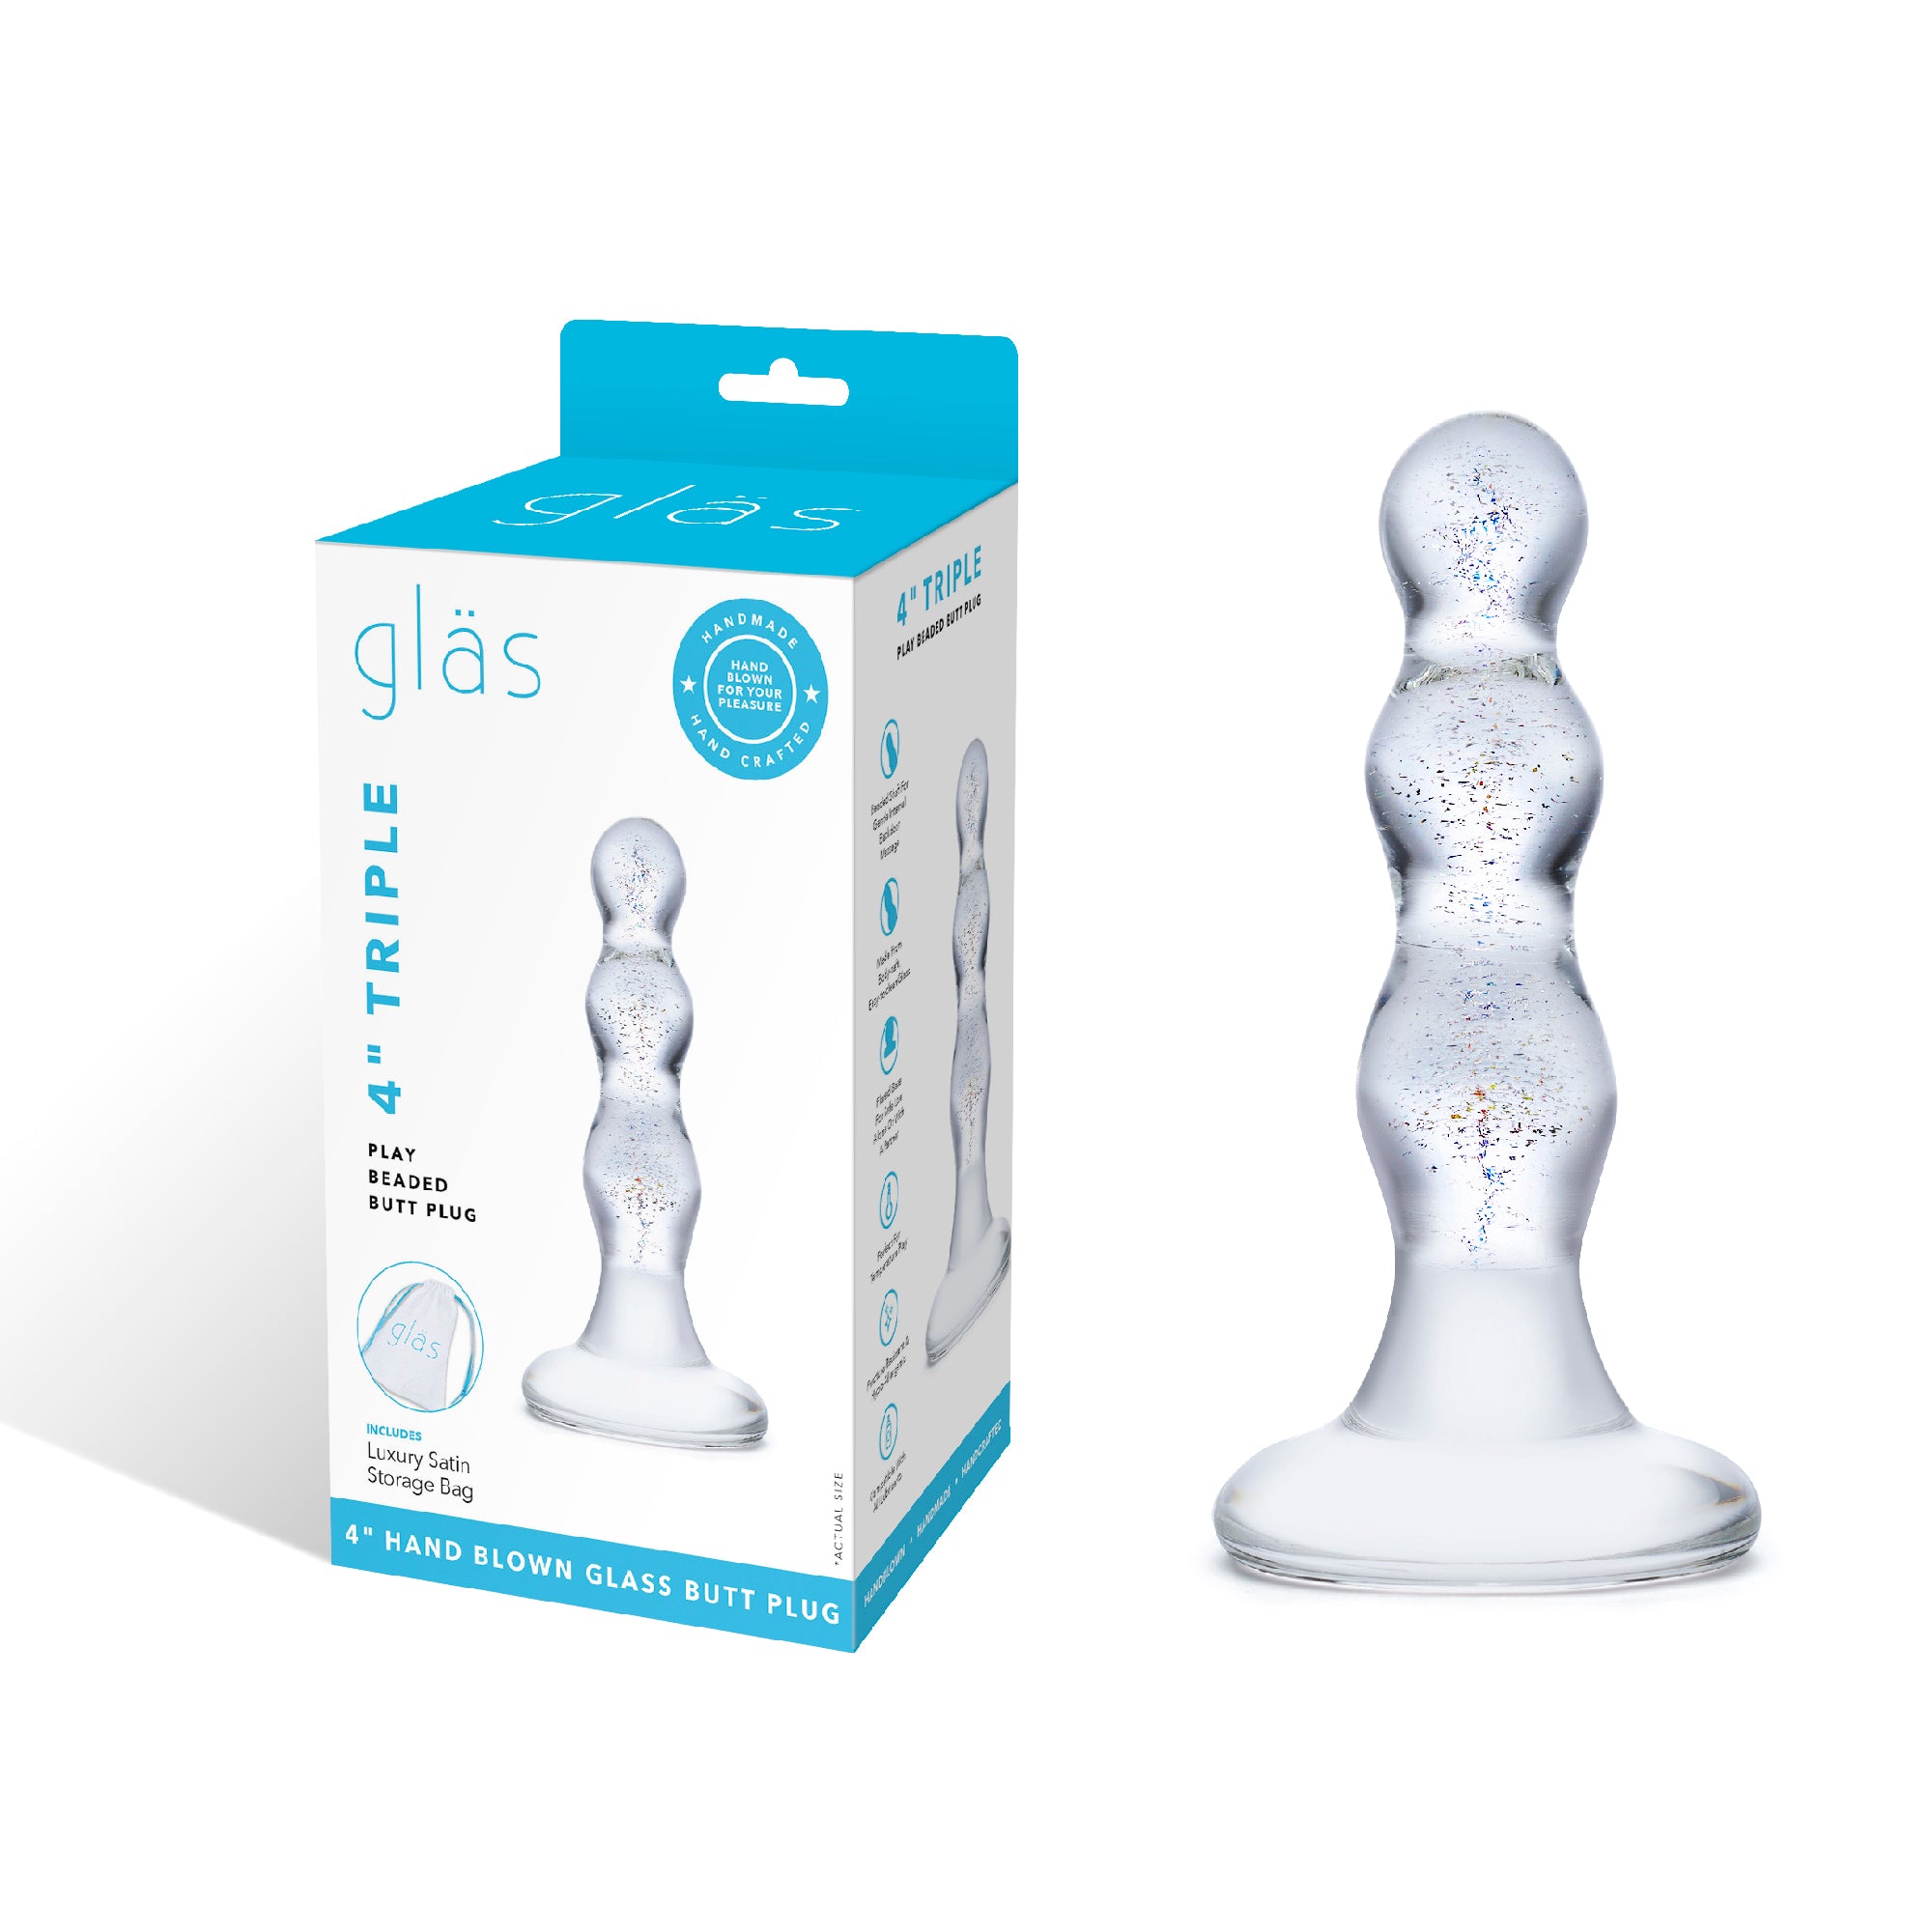 Packaging of the Gläs Triple Play Beaded Glass Butt Plug